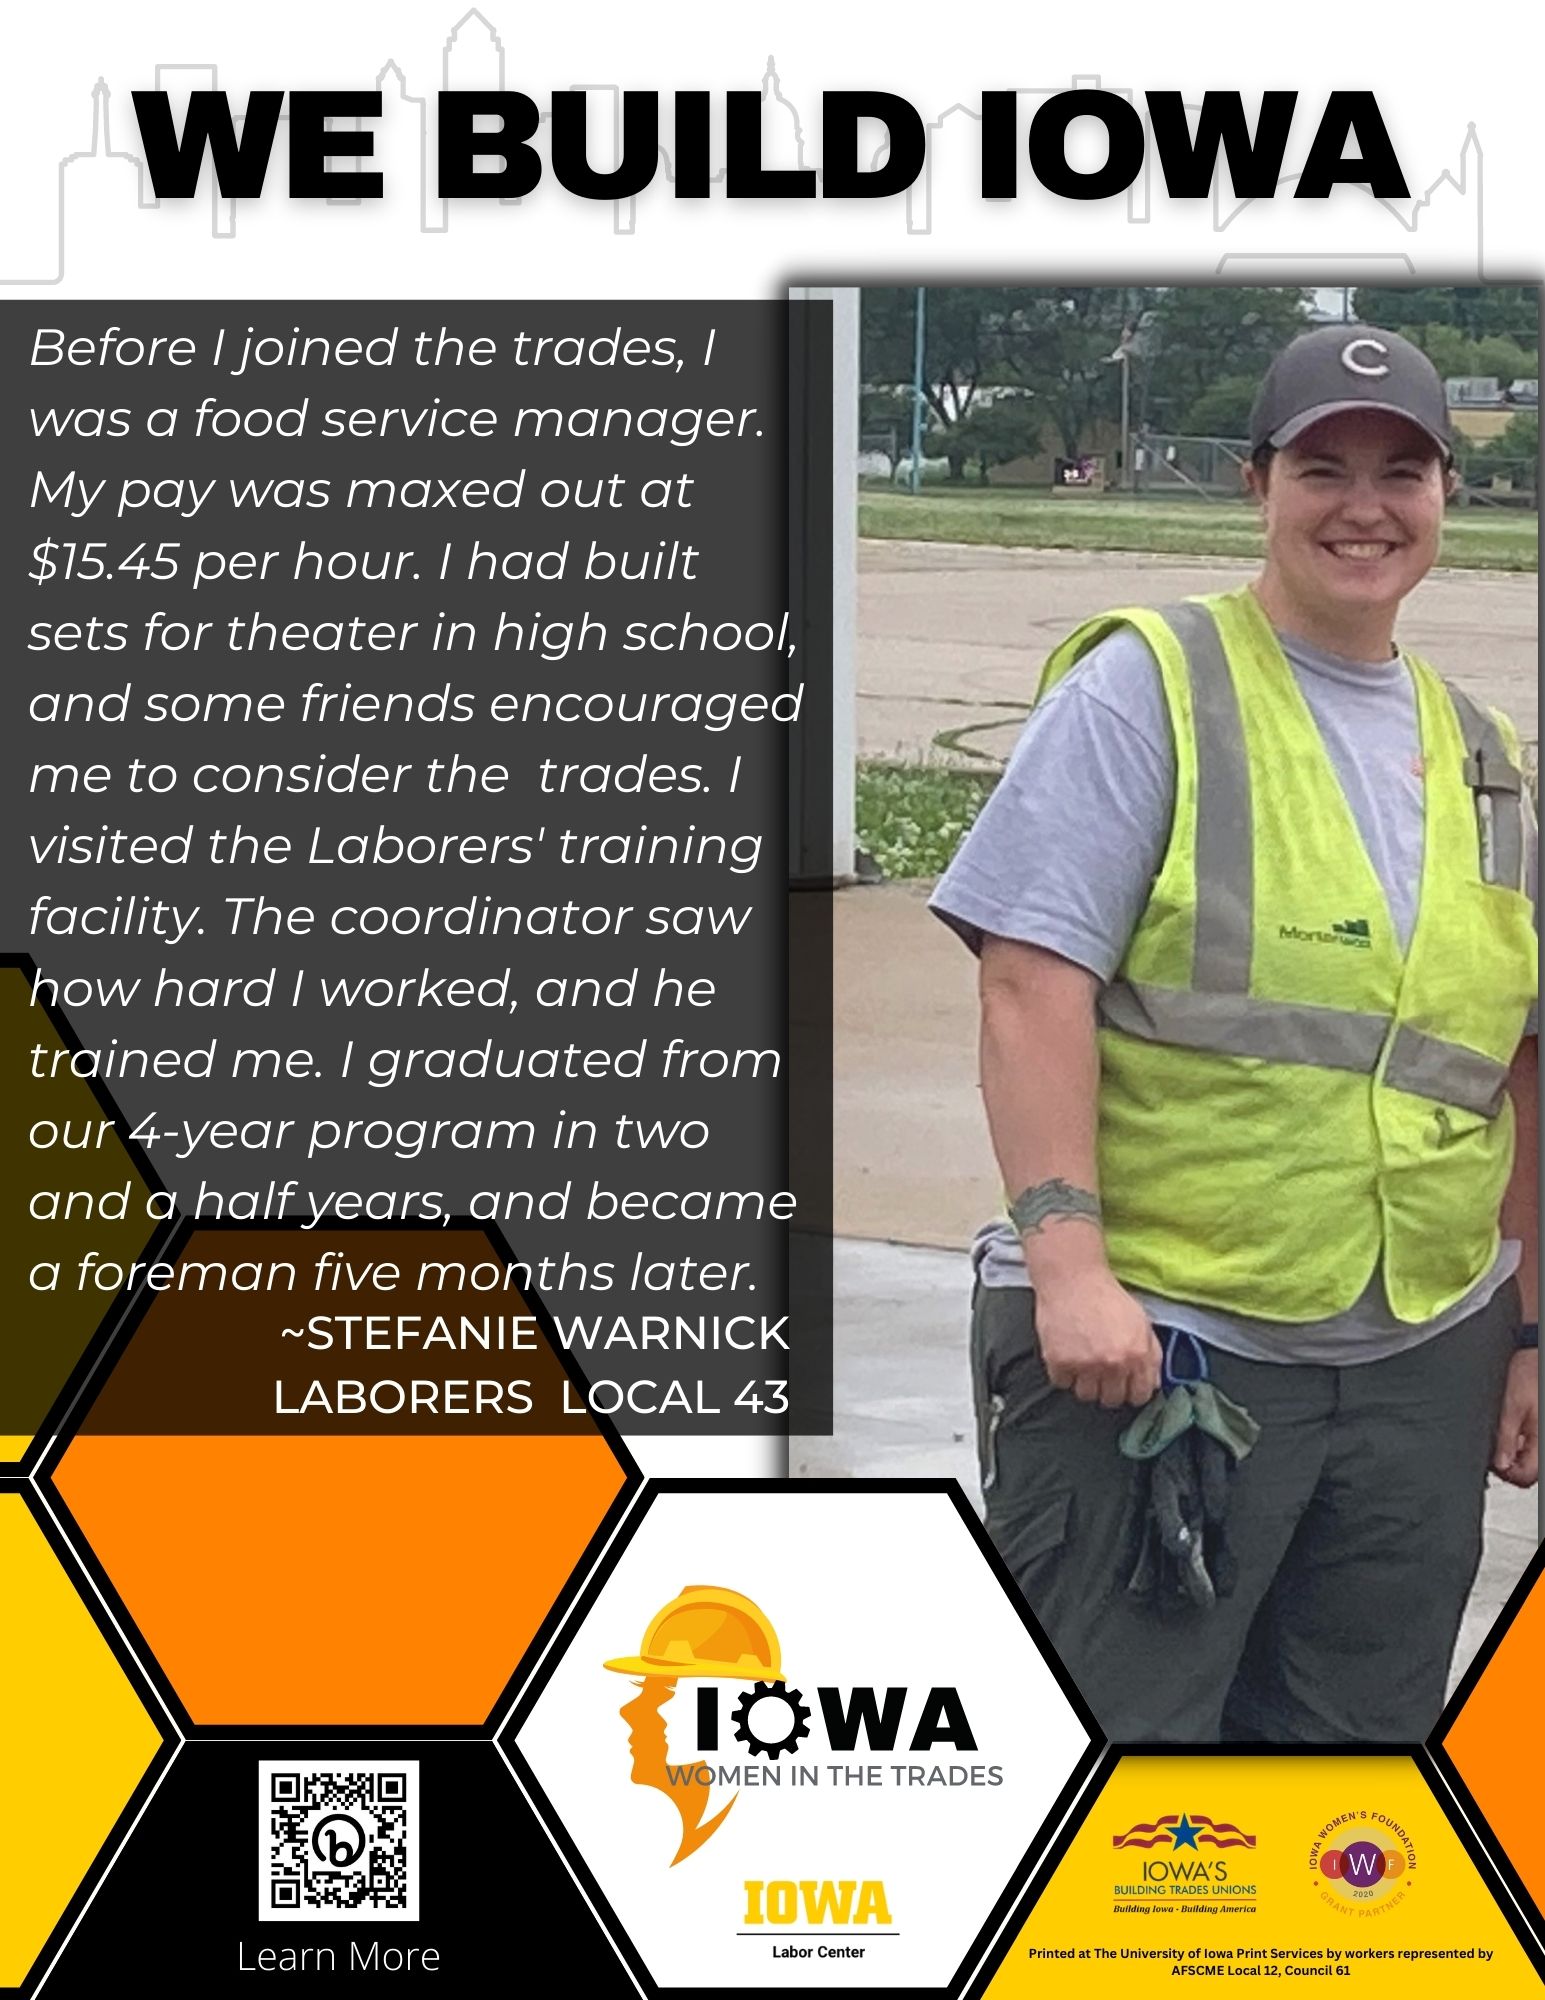 Iowa Women in Trades photo